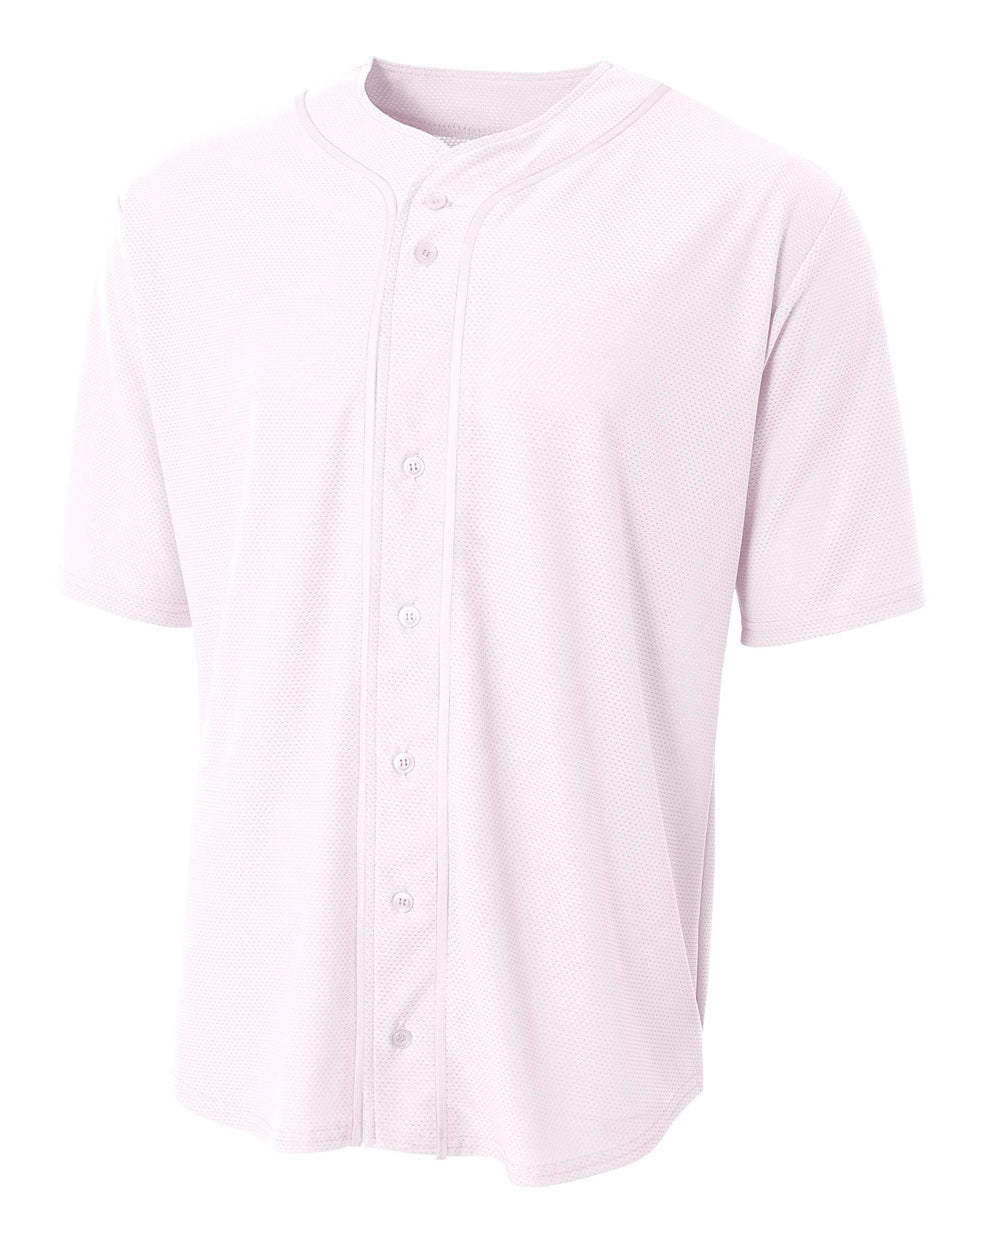 White A4 Short Sleeve Full Button Baseball Jersey